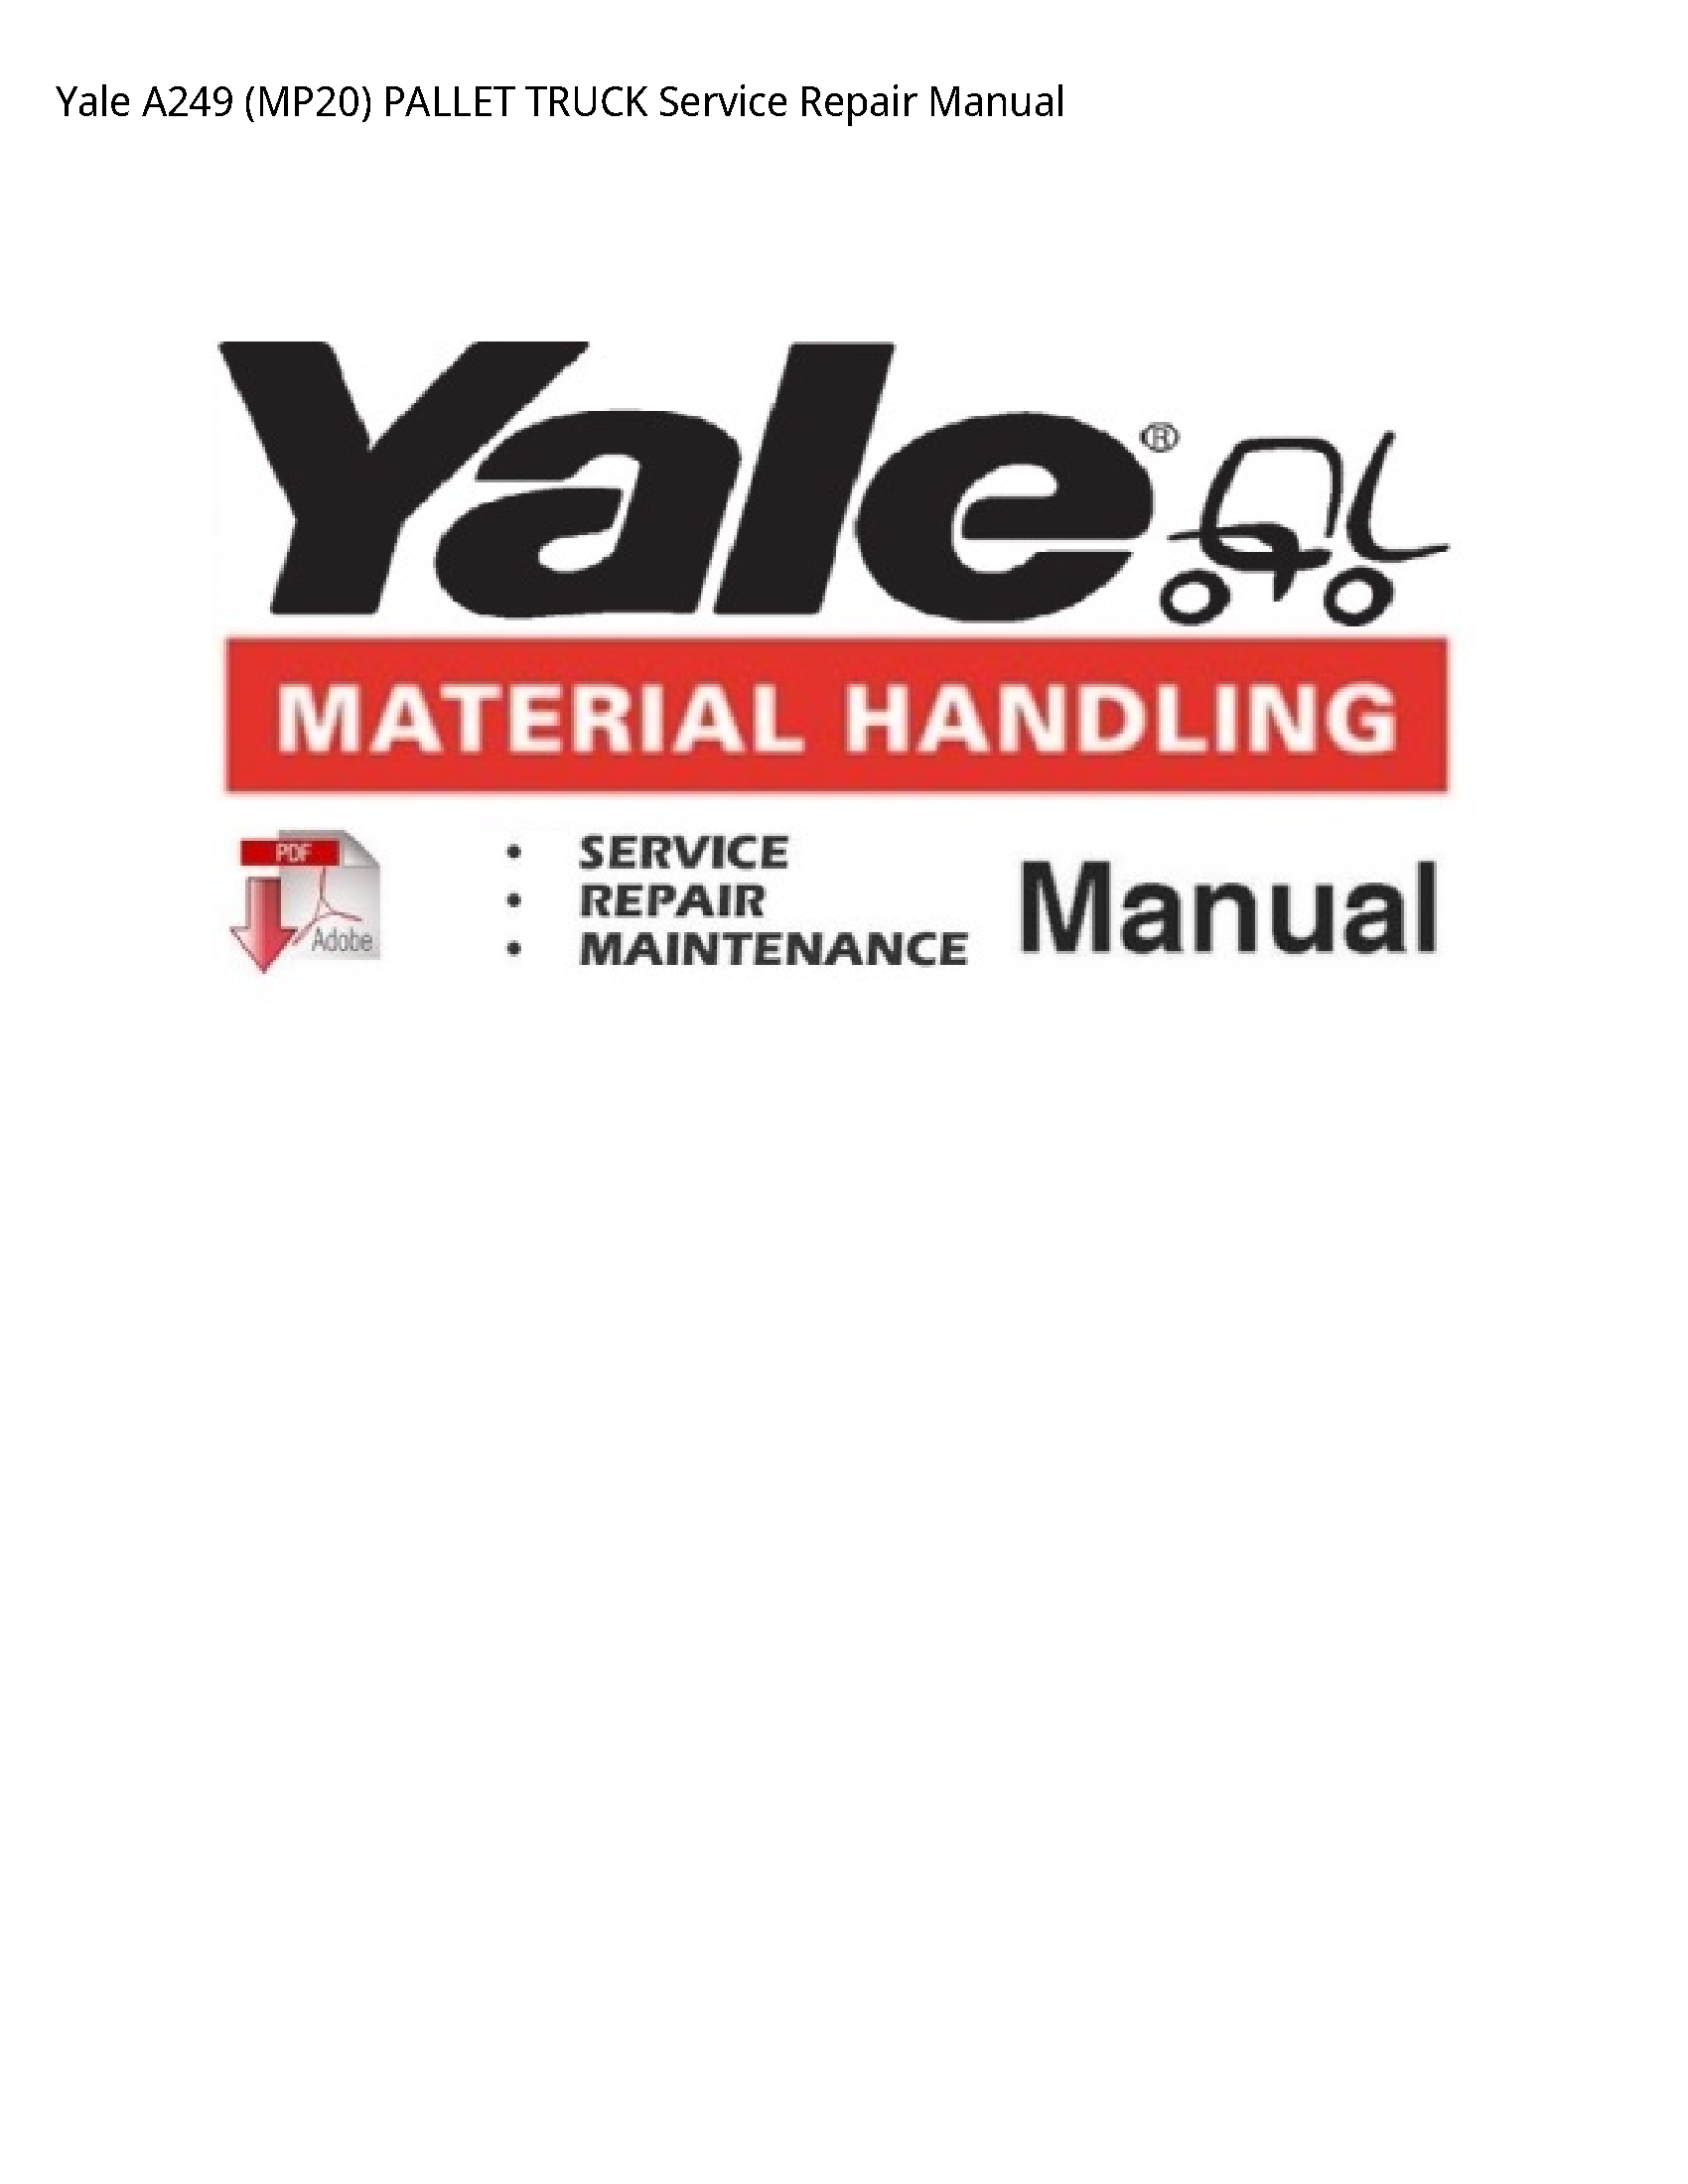 Yale A249 PALLET TRUCK manual